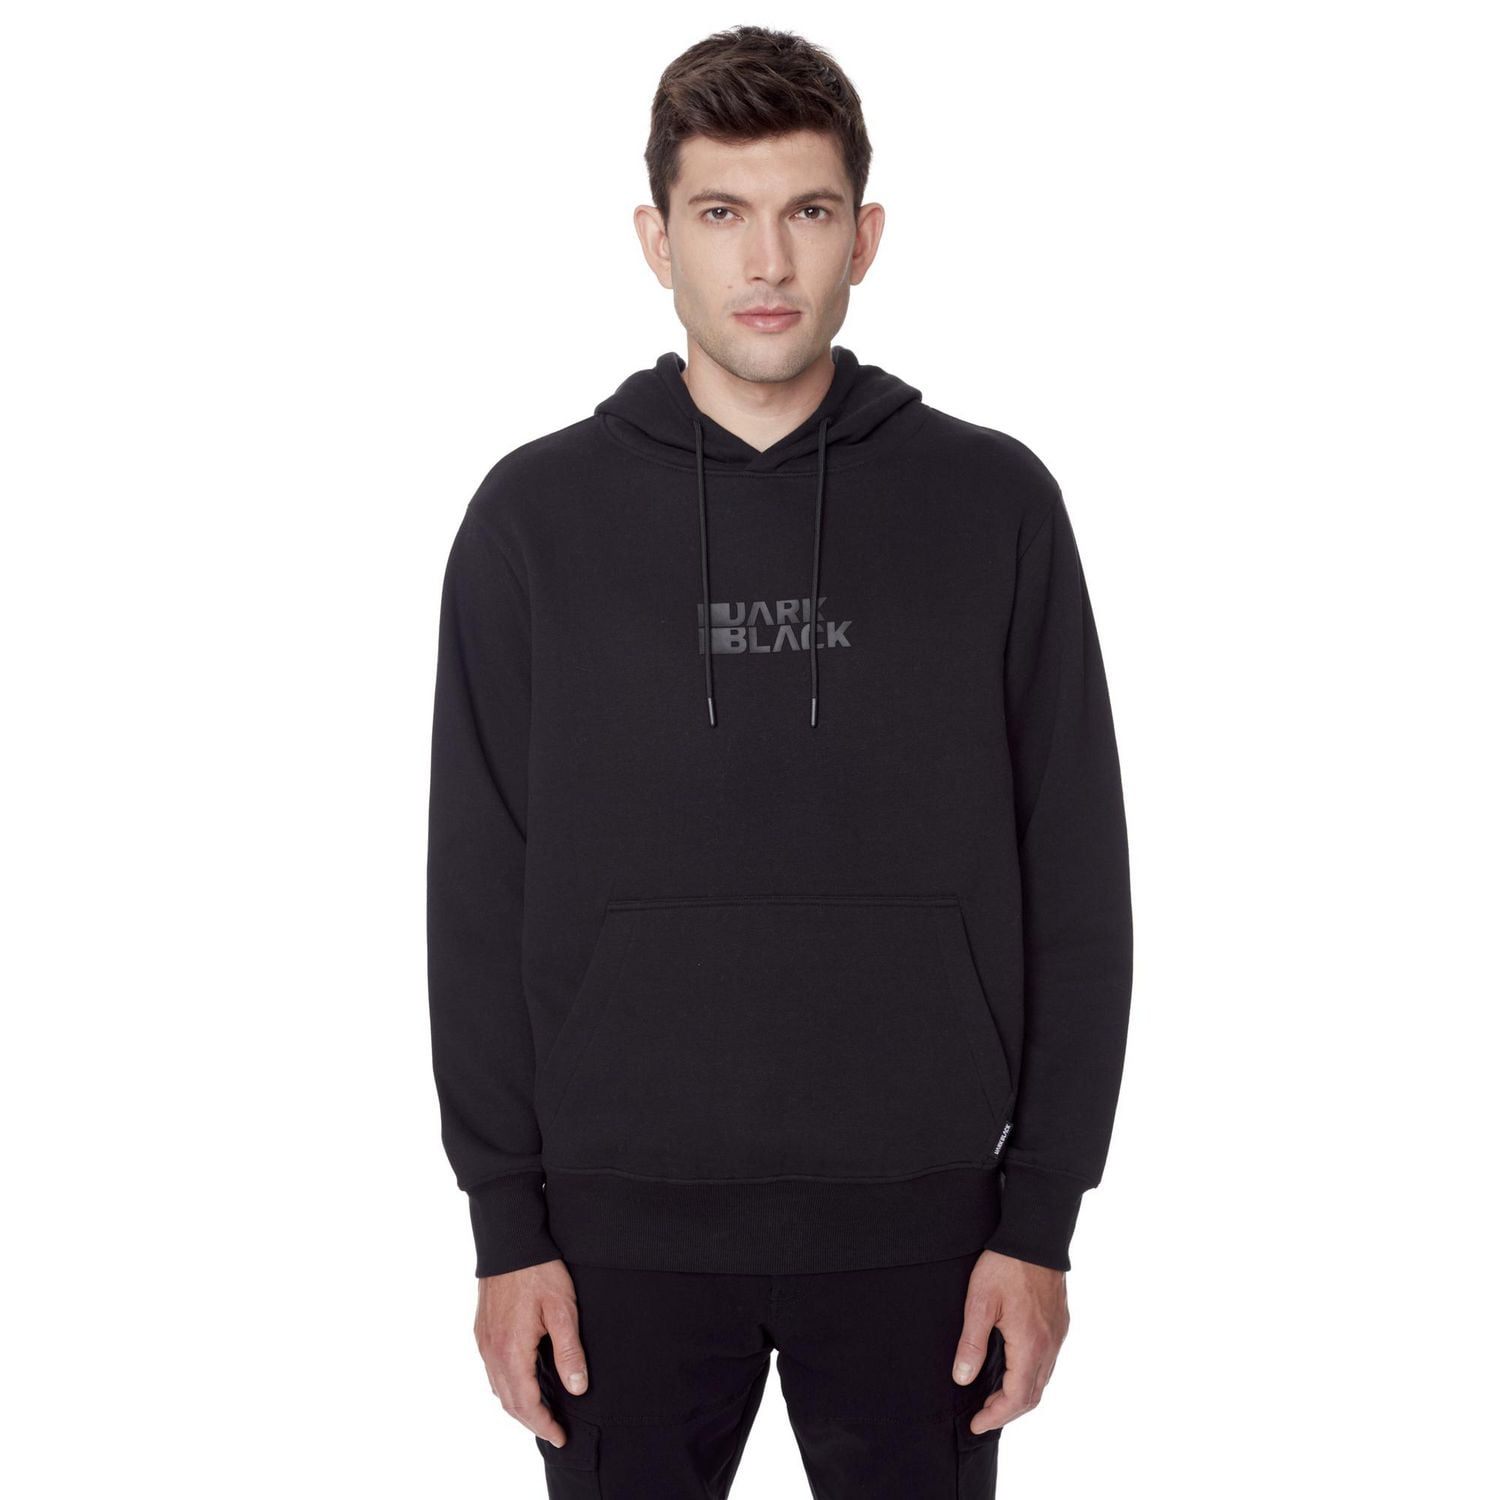 Don't Underestimate Dark Brandon Shirt, hoodie, sweater, long